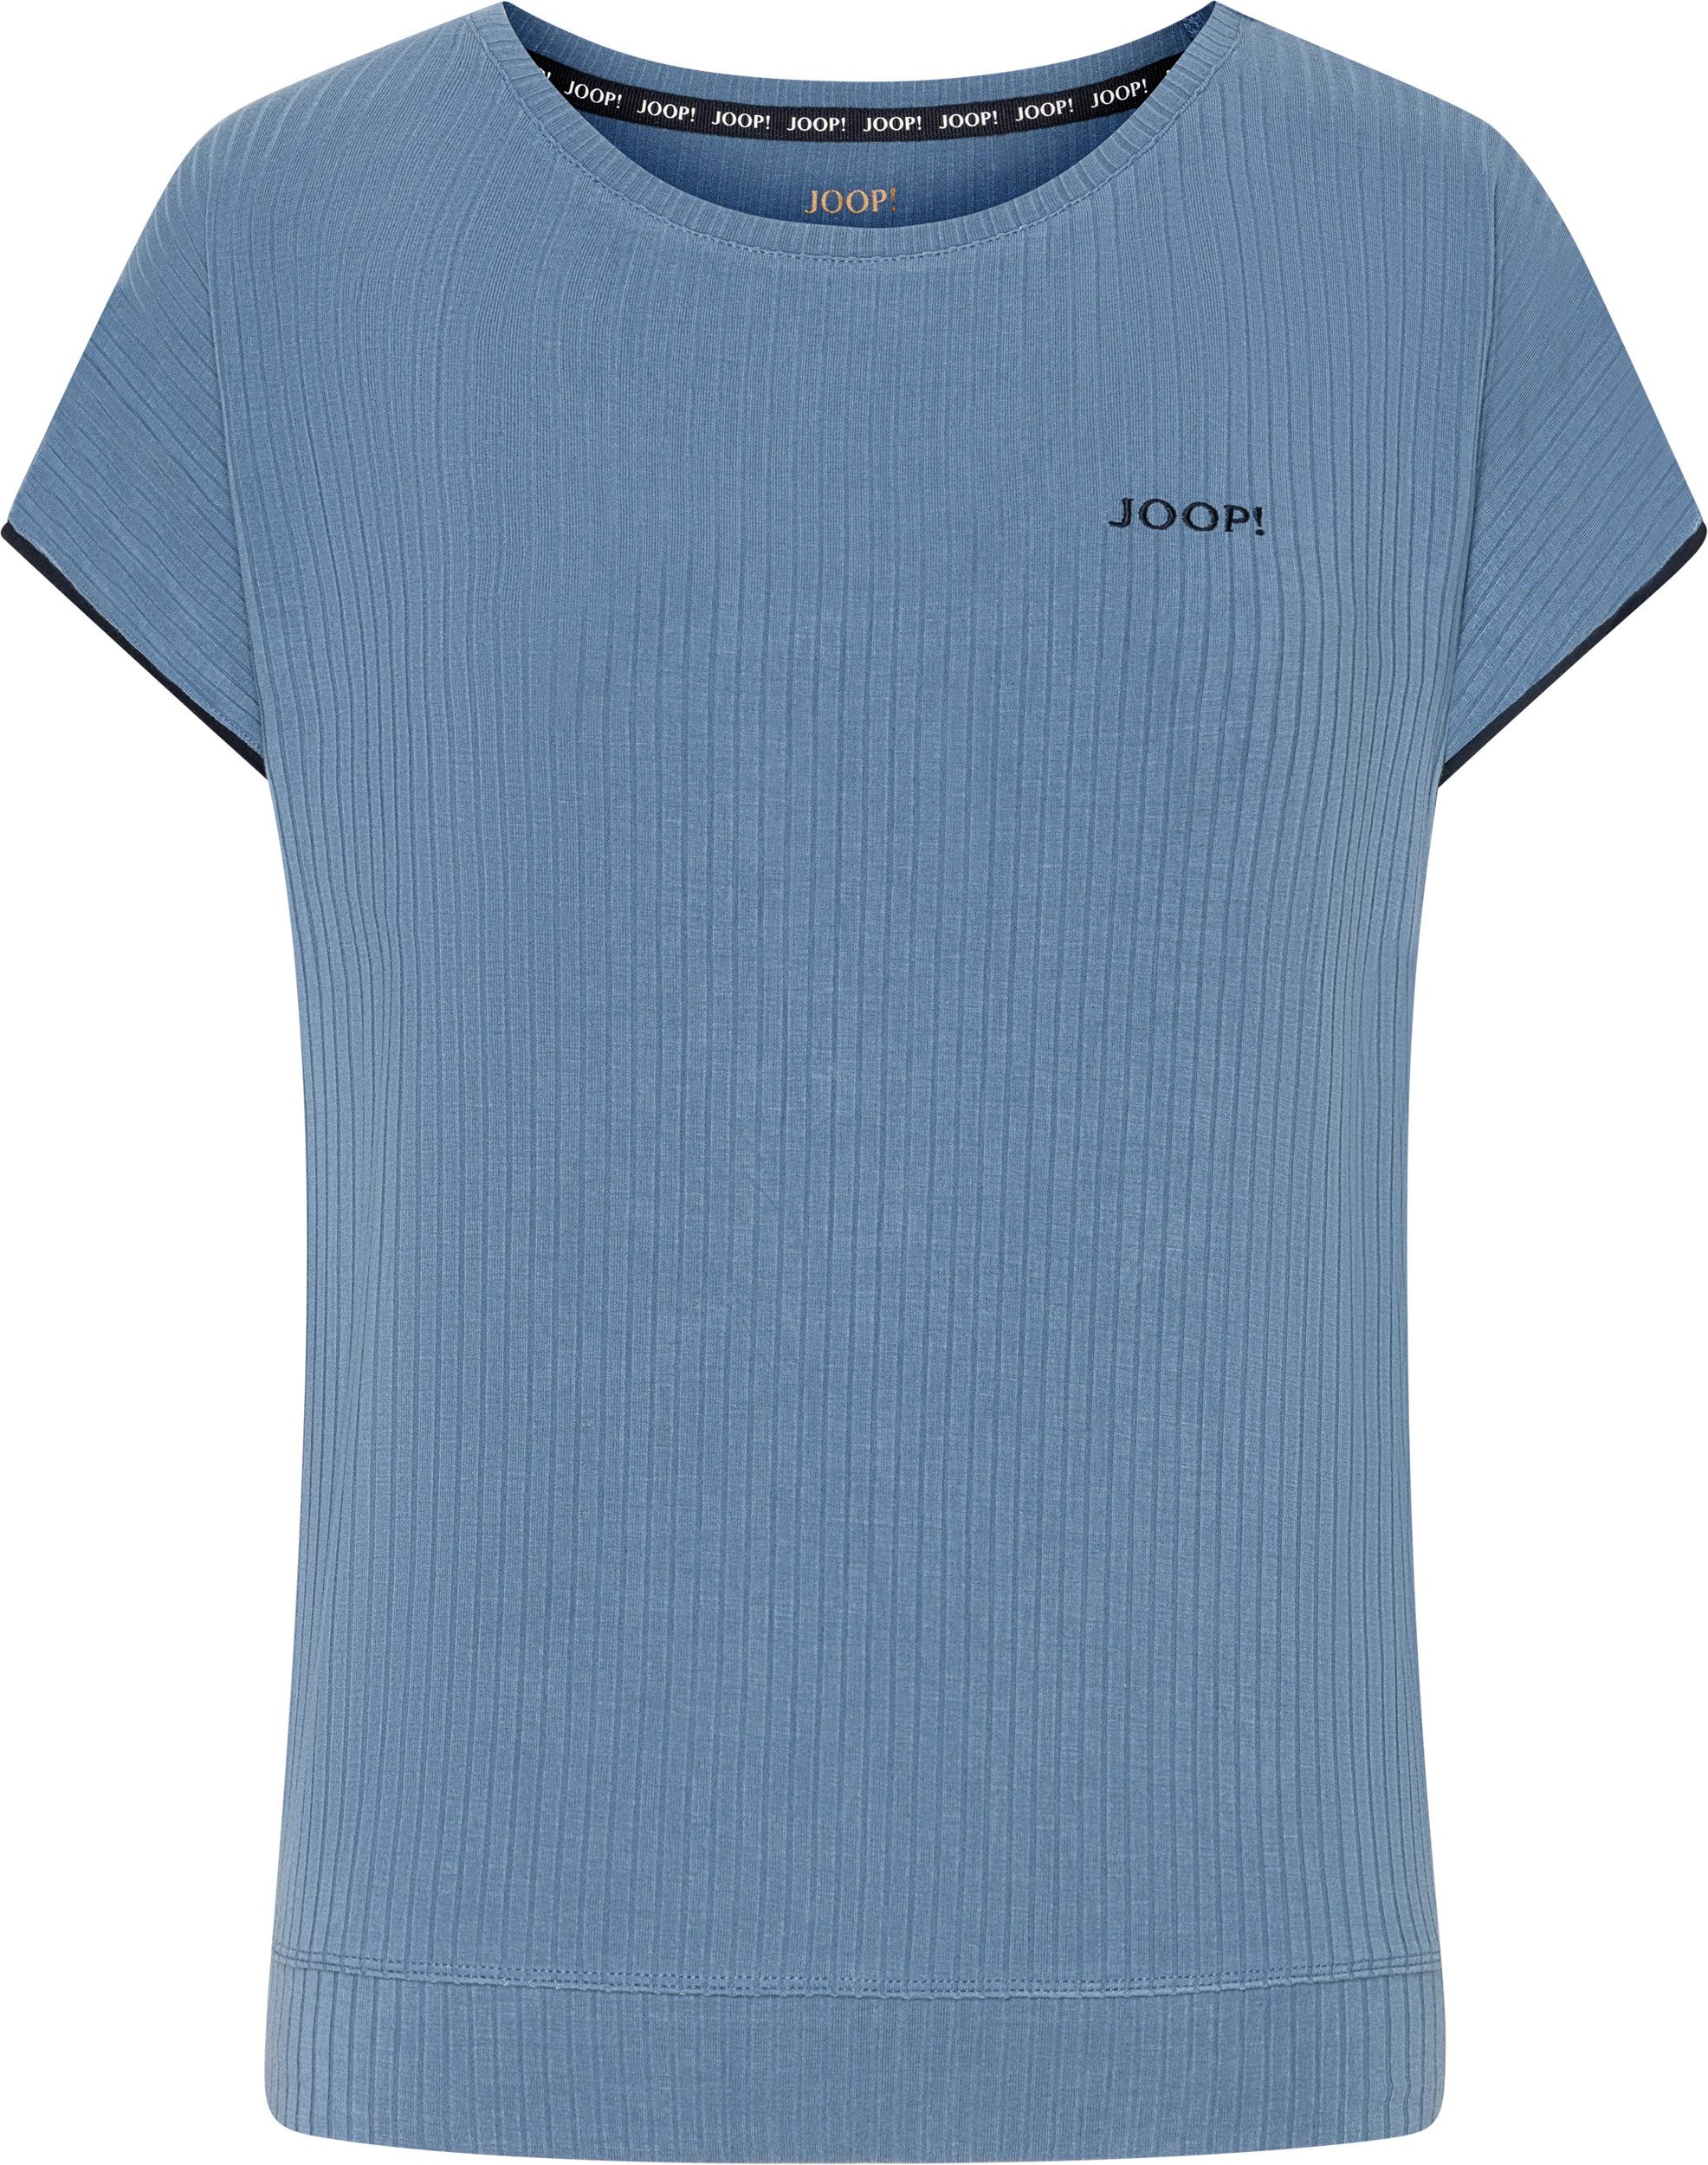 JOOP! Bodywear T-Shirt JOOP! Urban Perfection Shirt ocean blue